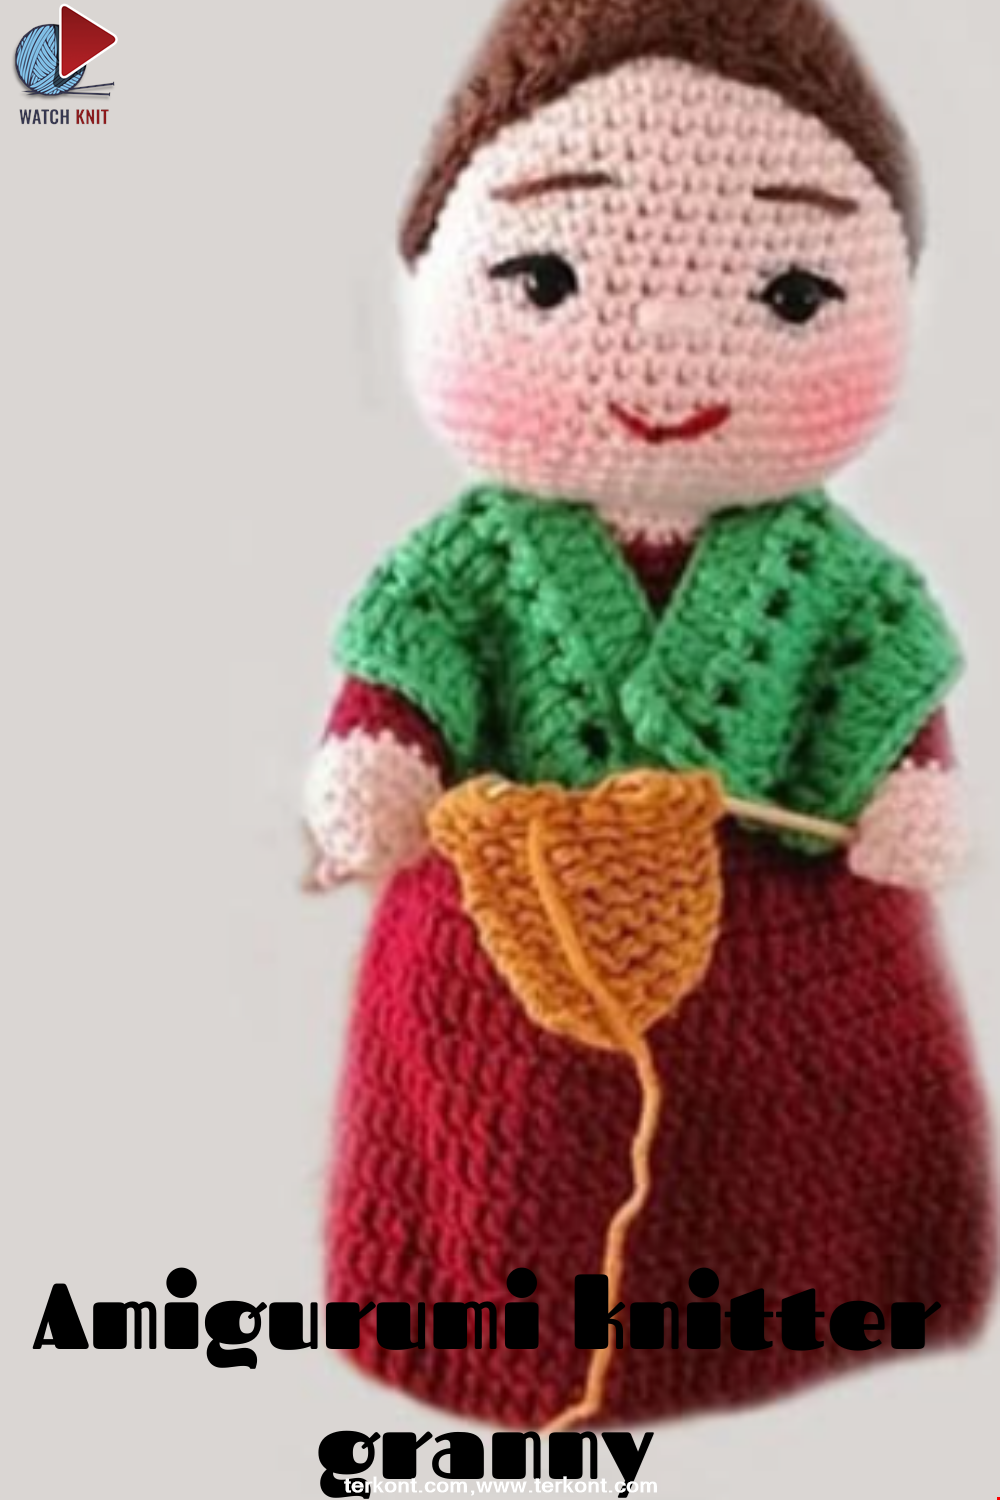 Amigurumi knitter granny recipe and making